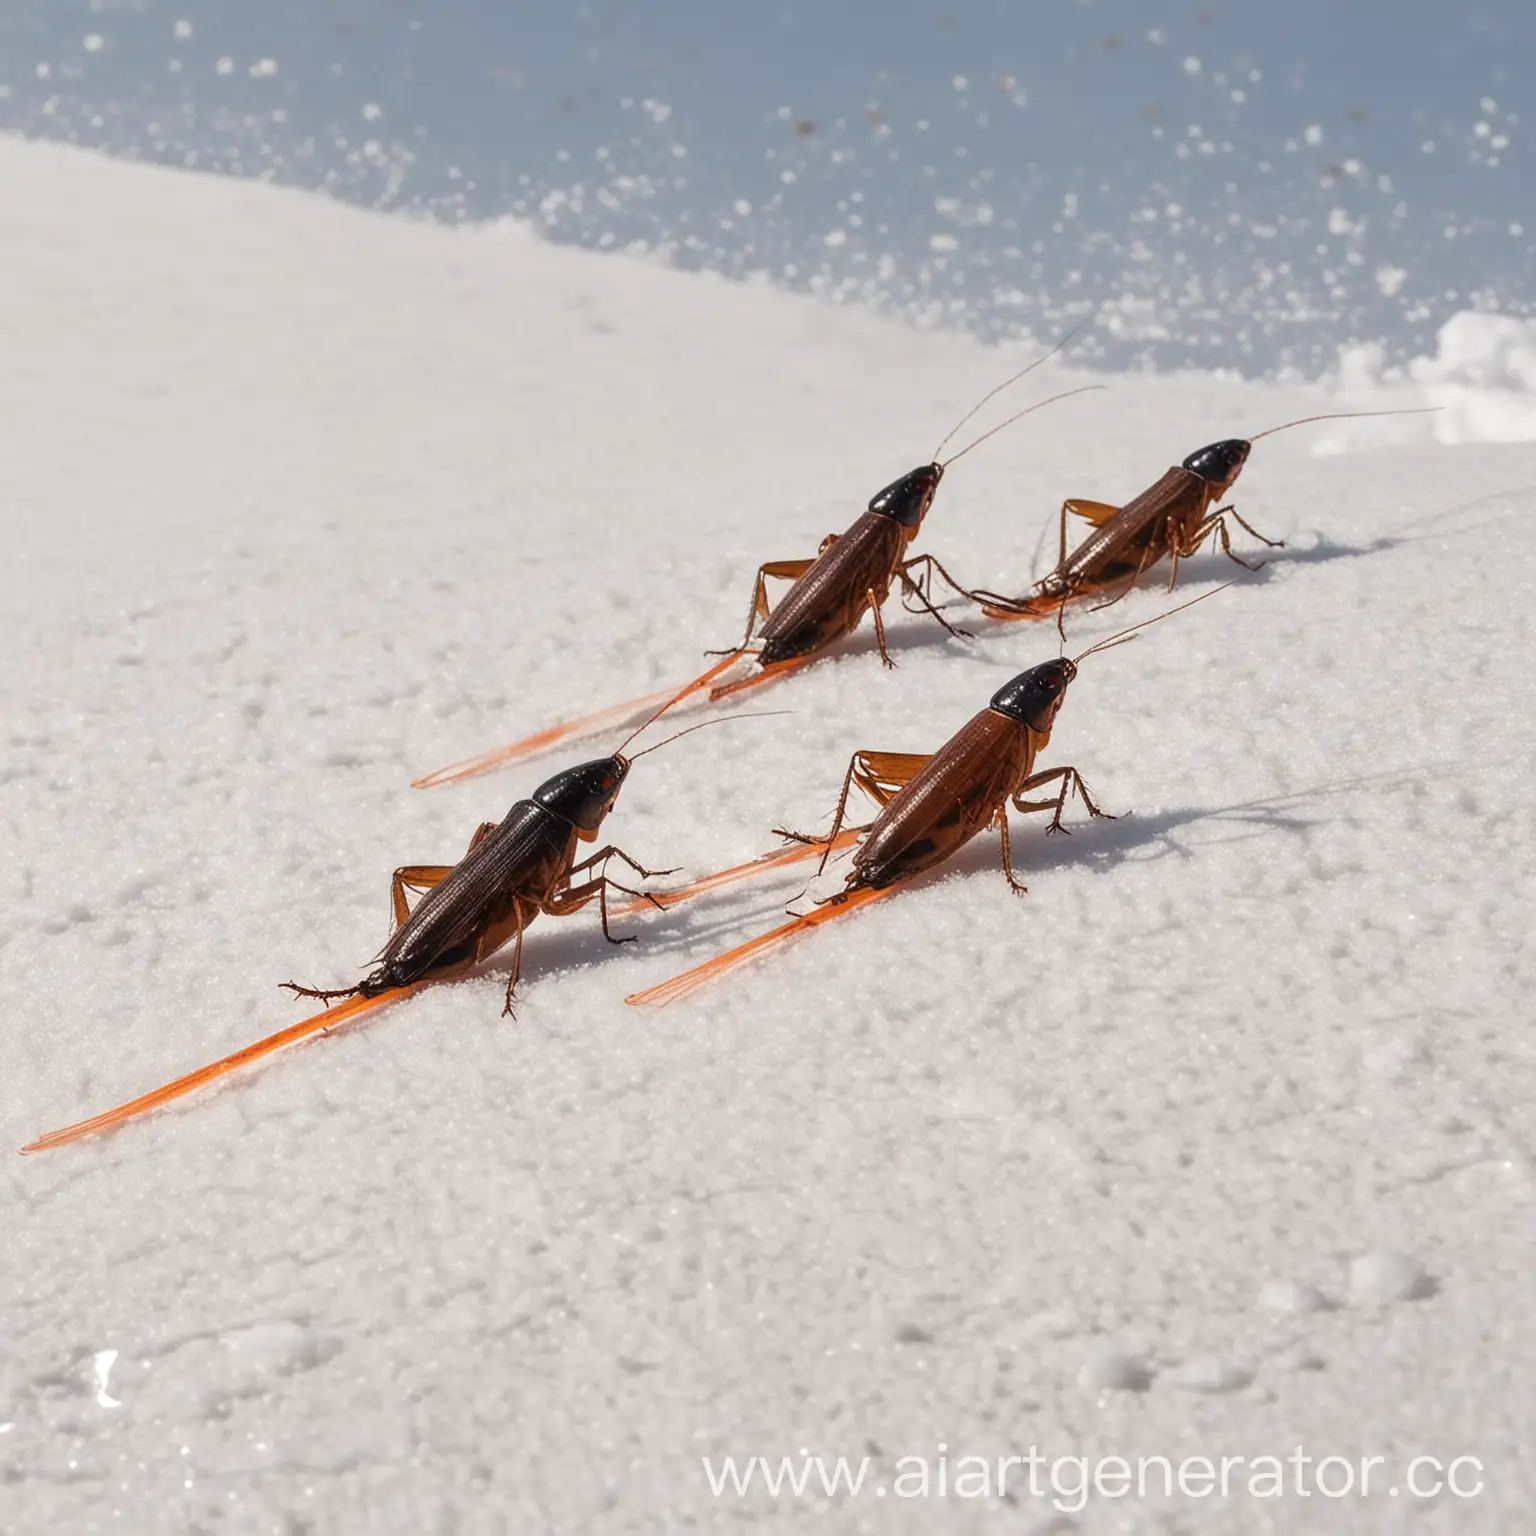 тараканы катаются на лыжах